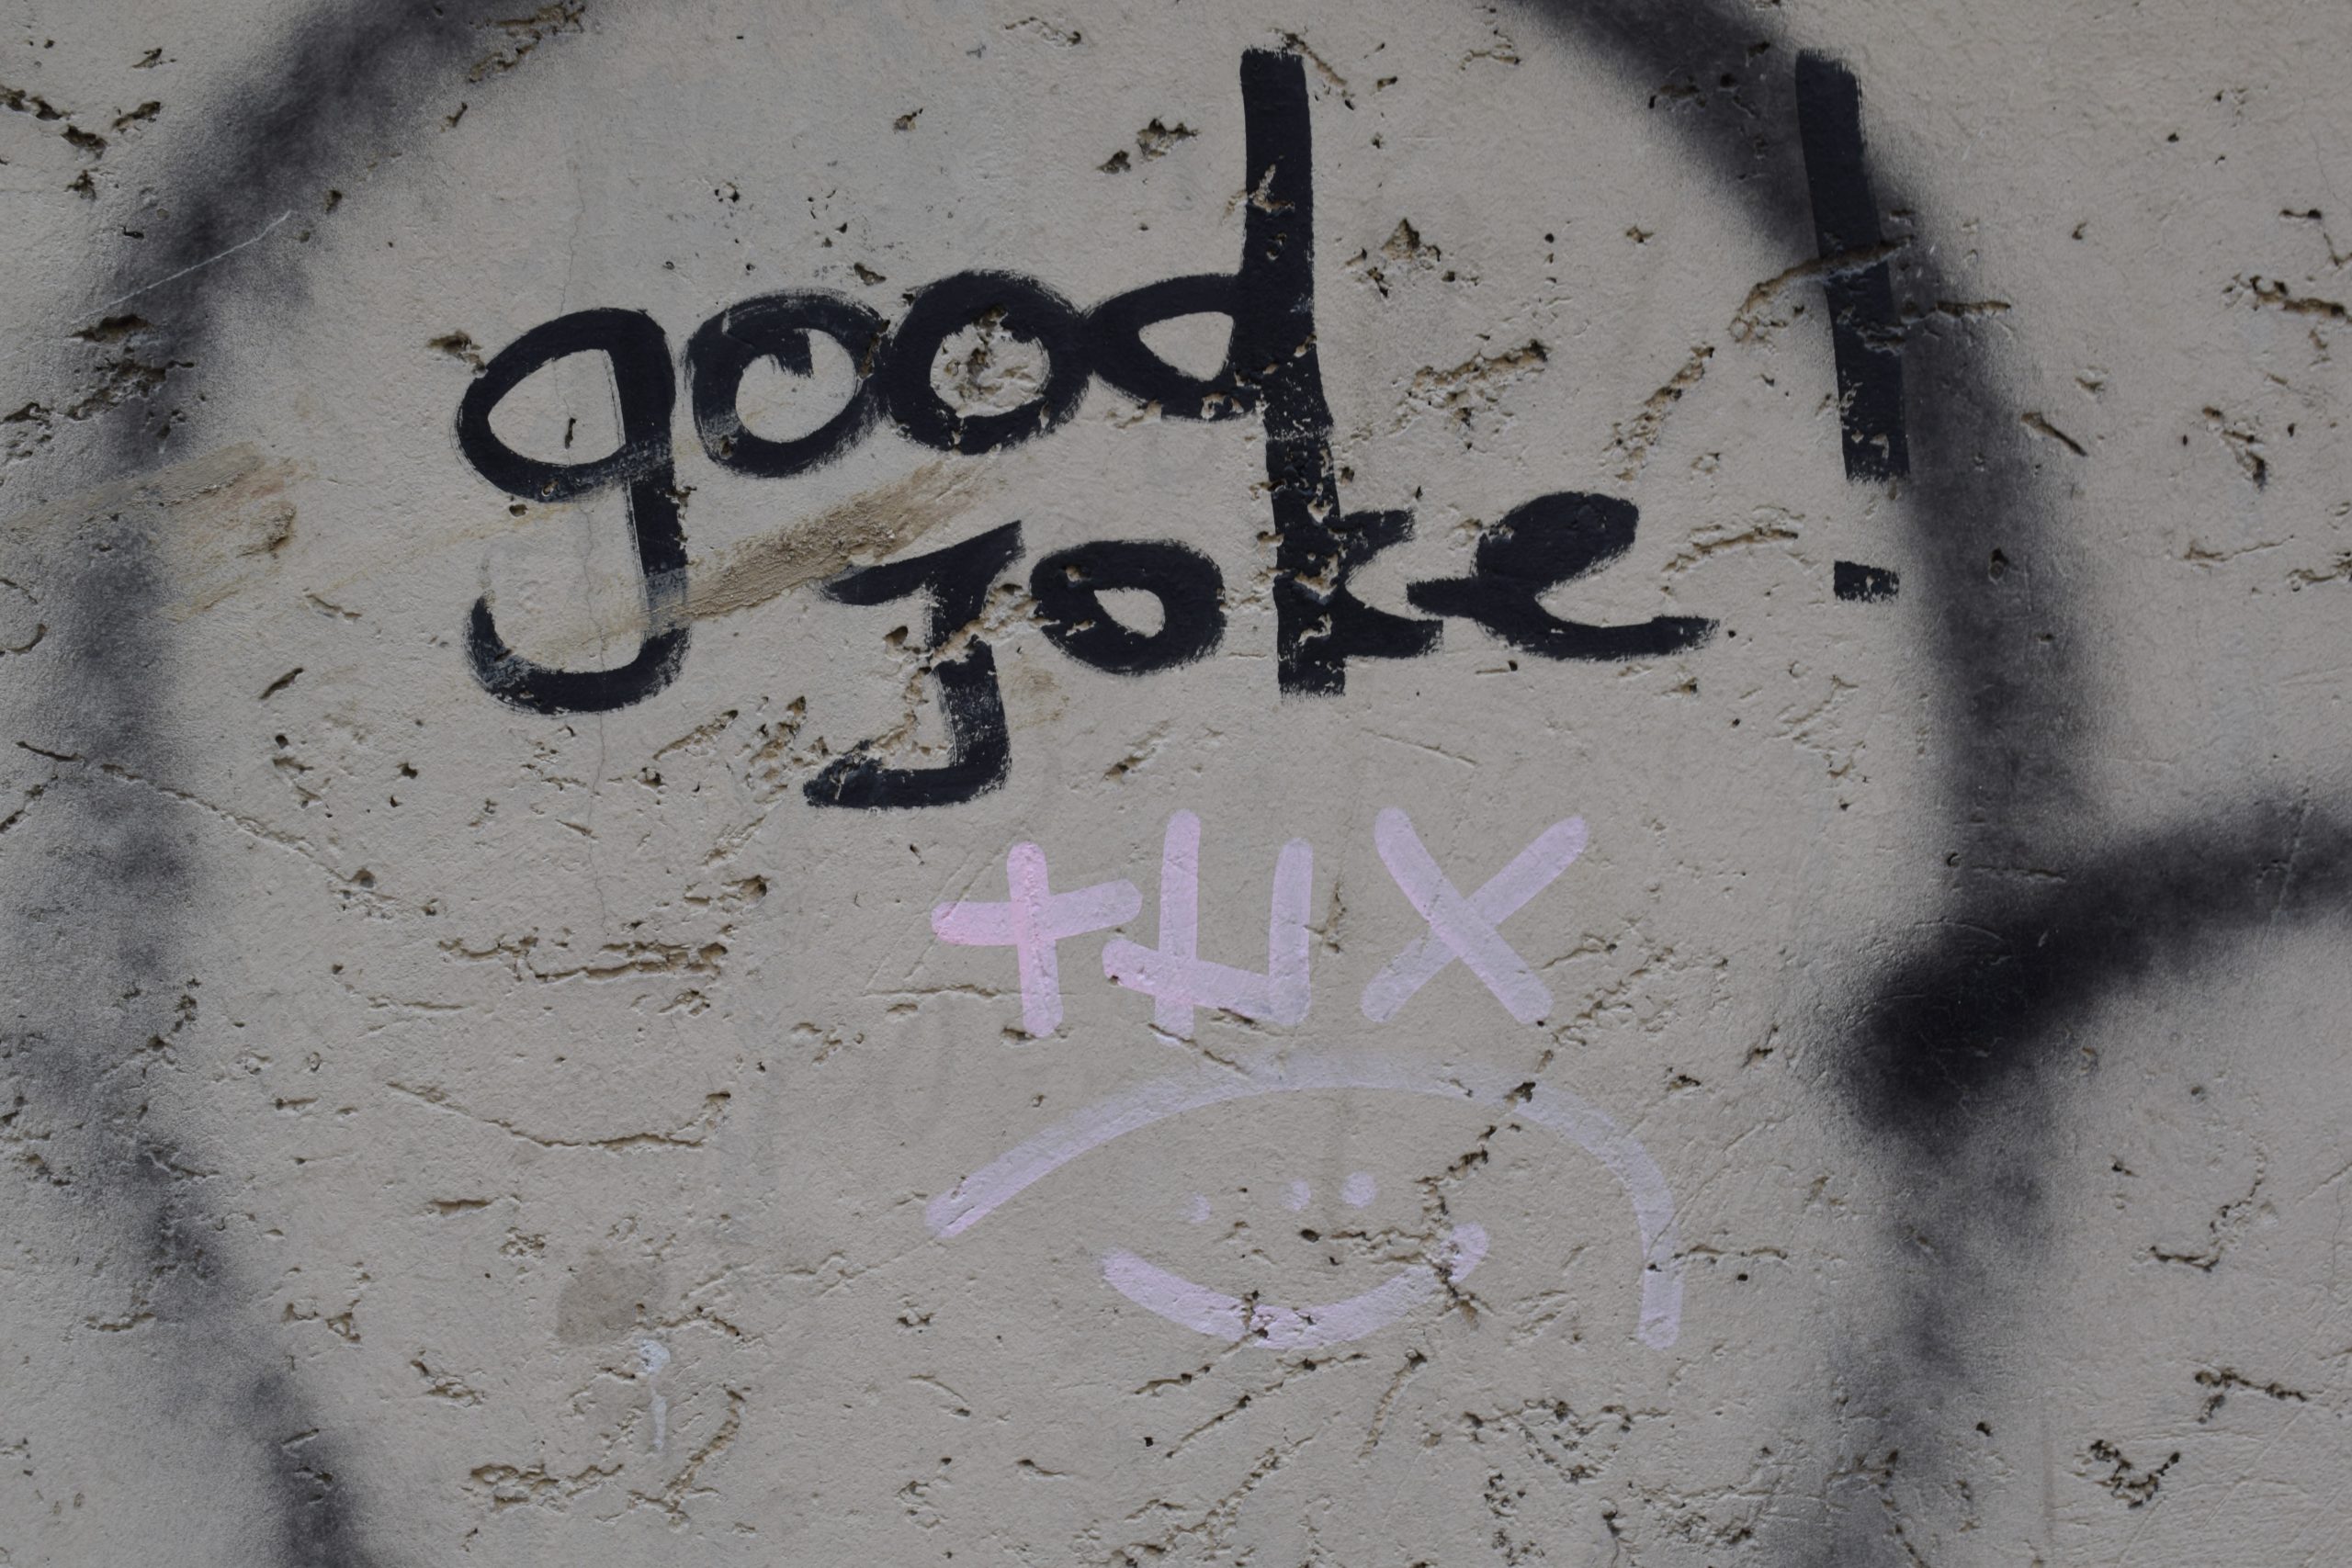 Marker drawing on surface that says: Good Joke, Thx